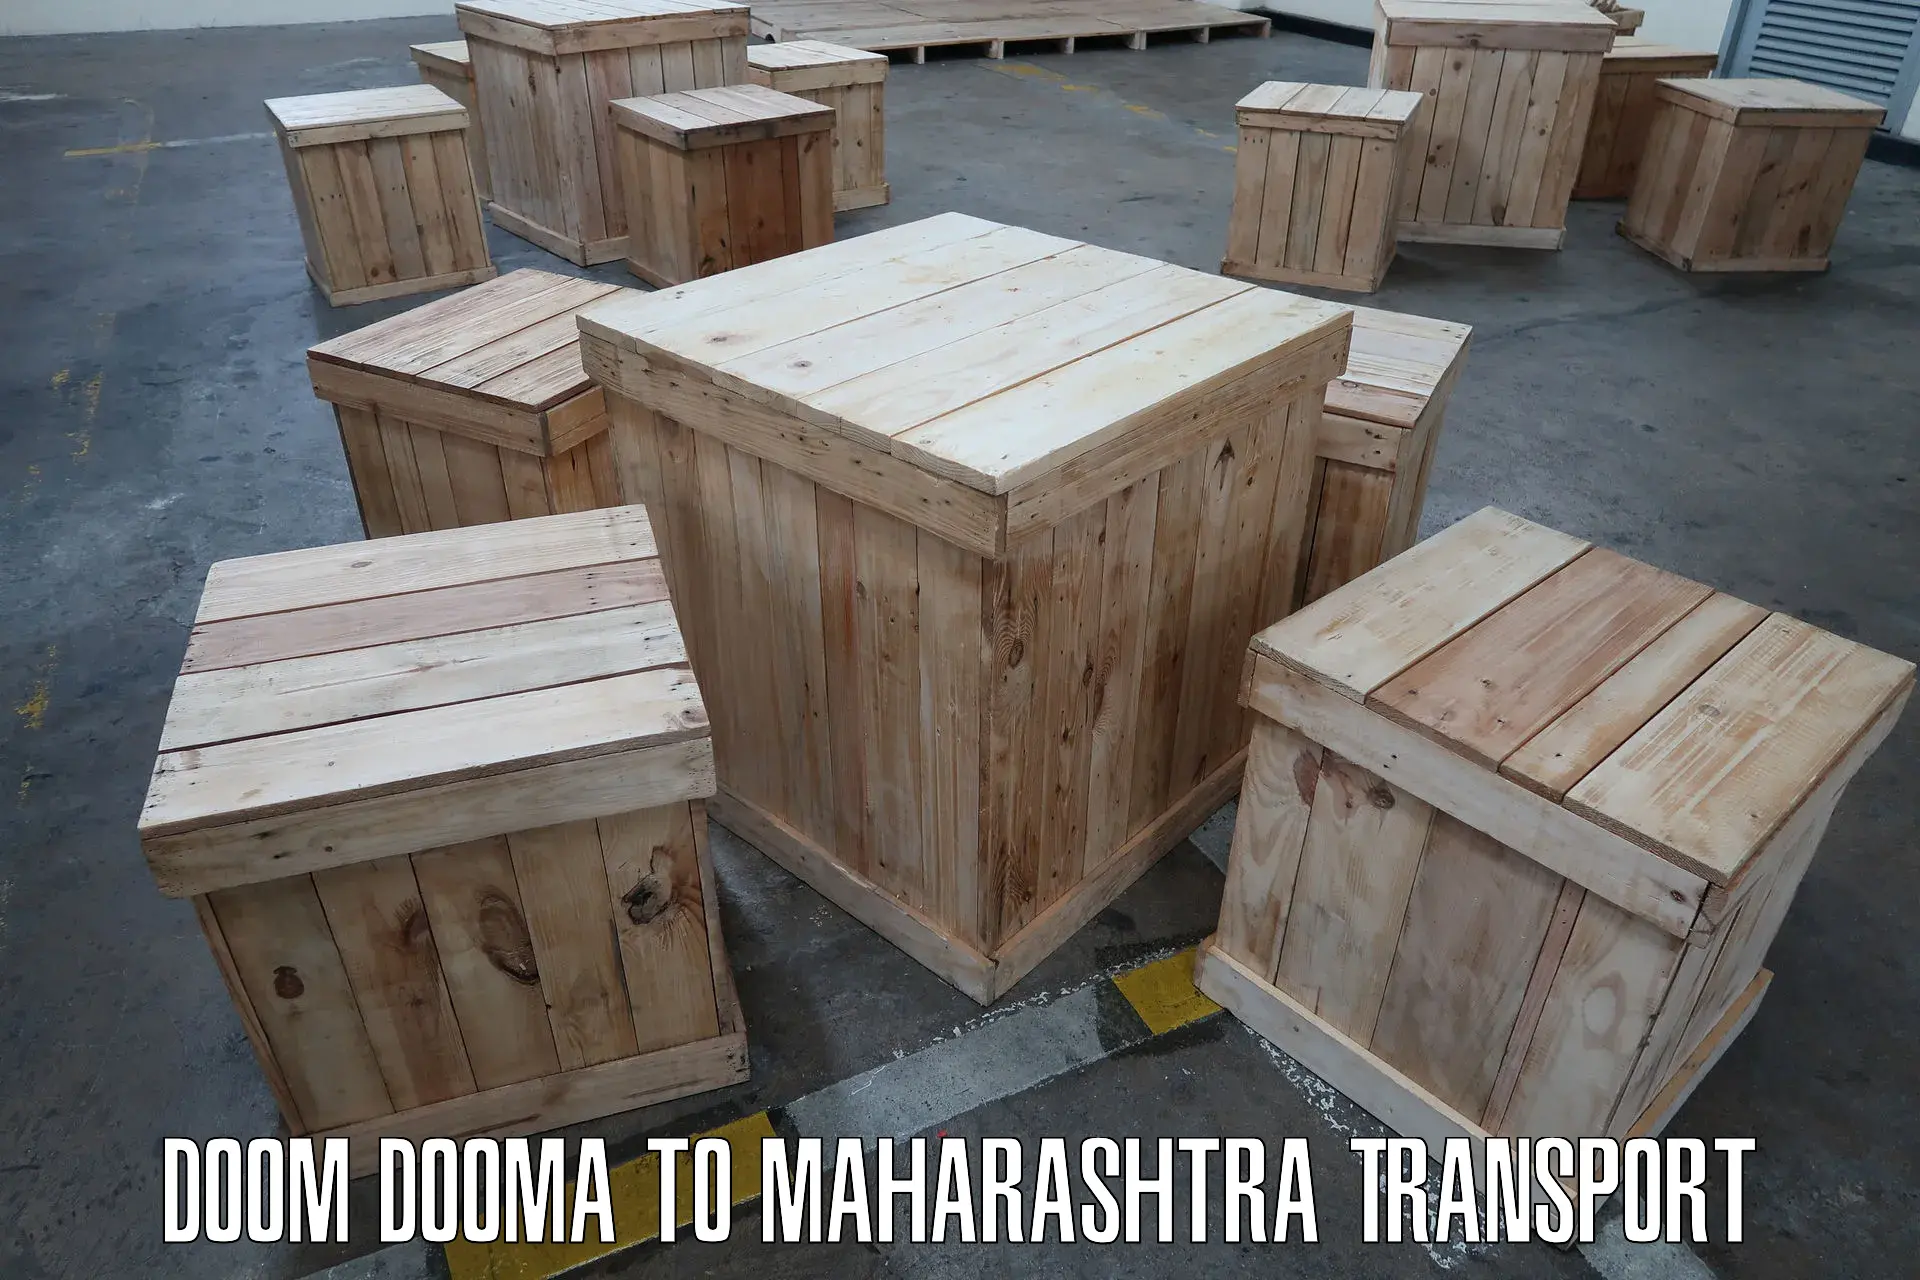 Furniture transport service Doom Dooma to Worli